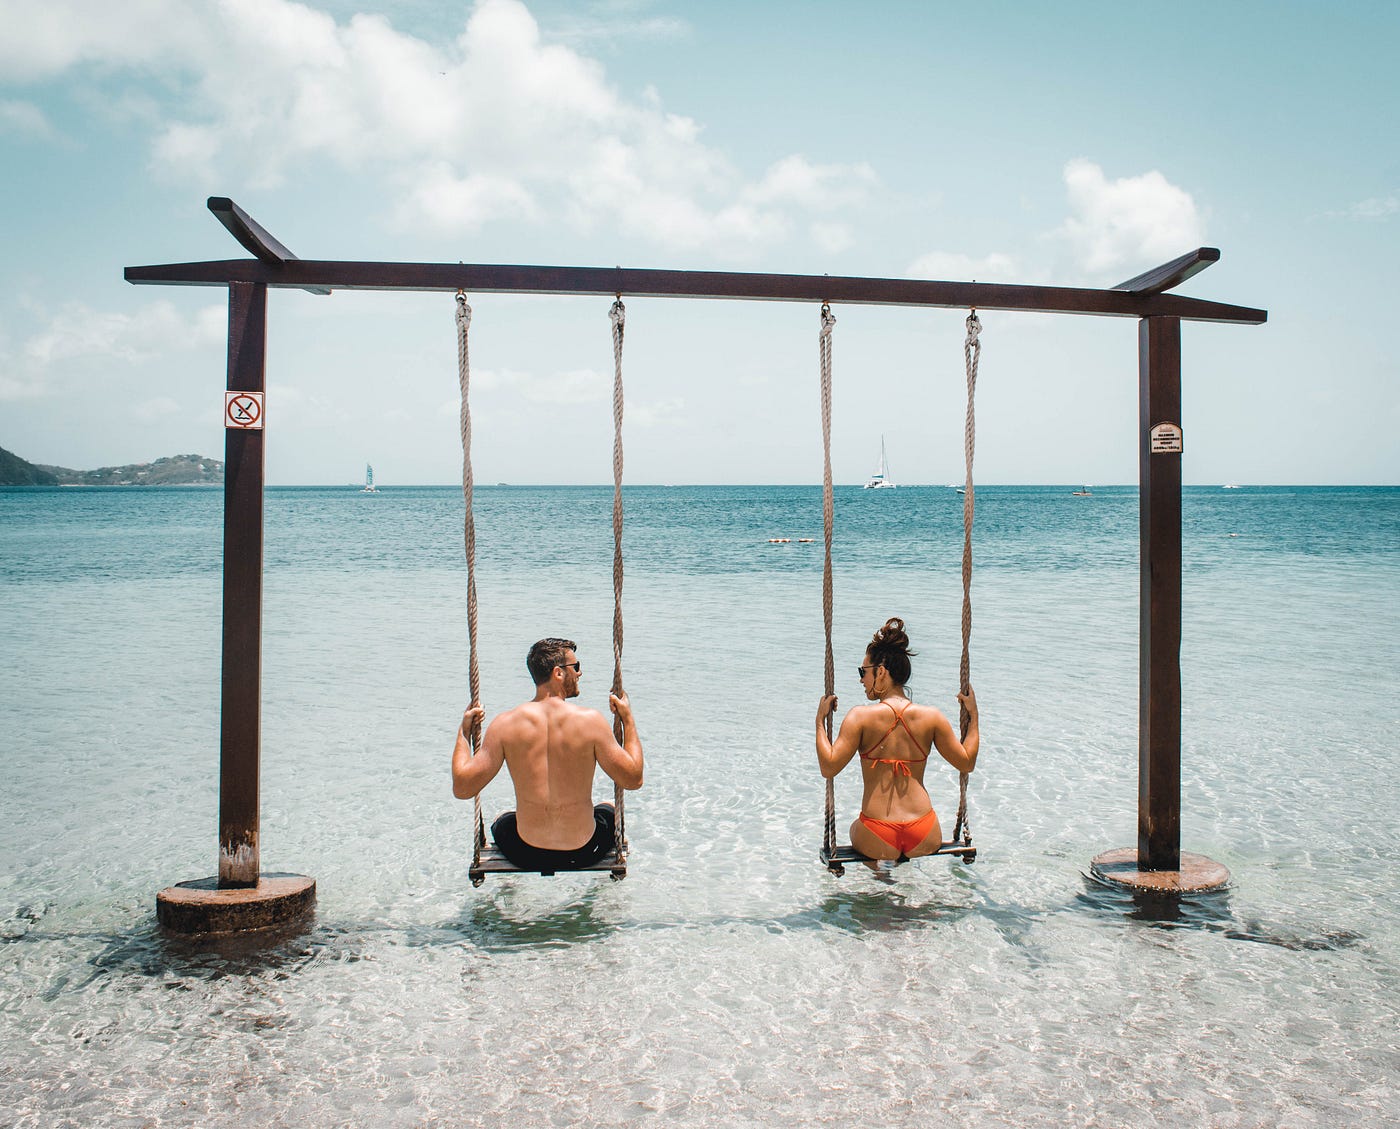 nude beach swingers blog